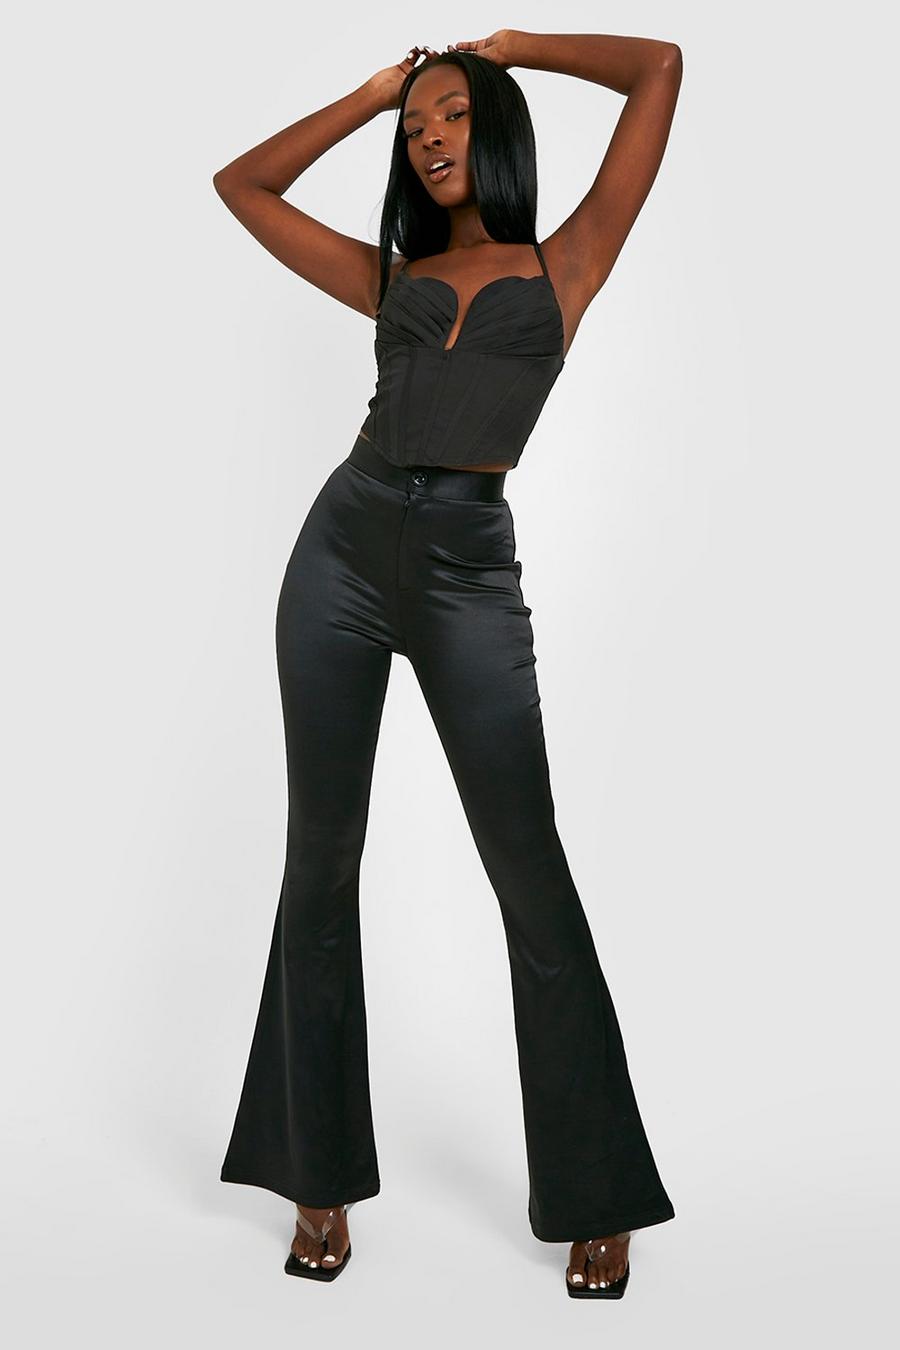 https://media.boohoo.com/i/boohoo/gzz28042_black_xl/female-black-shaping-disco-high-waisted-flared-trousers/?w=900&qlt=default&fmt.jp2.qlt=70&fmt=auto&sm=fit